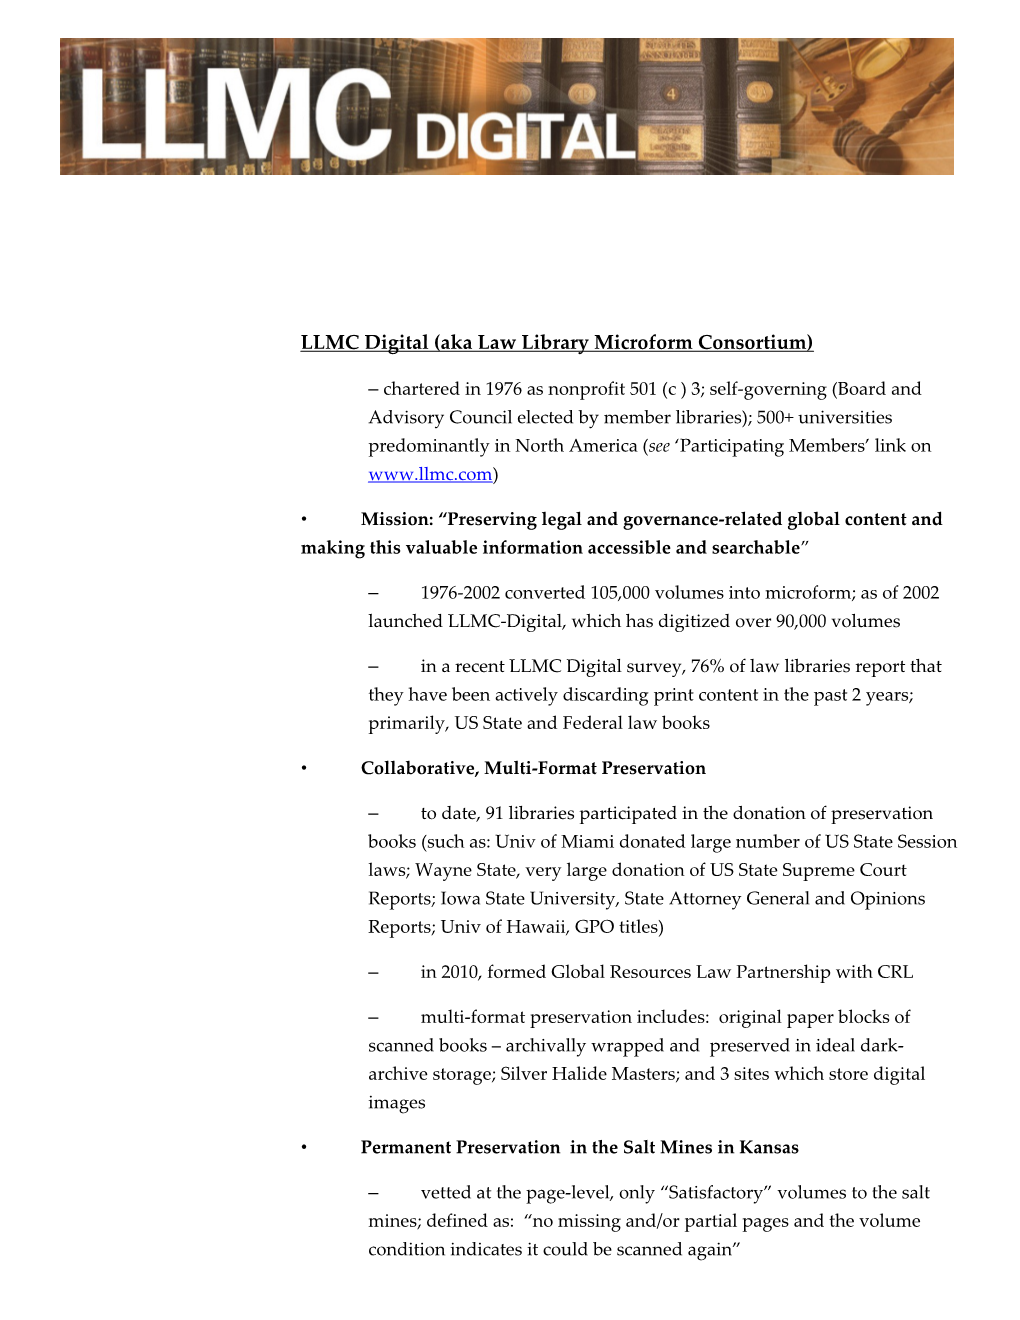 LLMC Digital (Aka Law Library Microform Consortium)